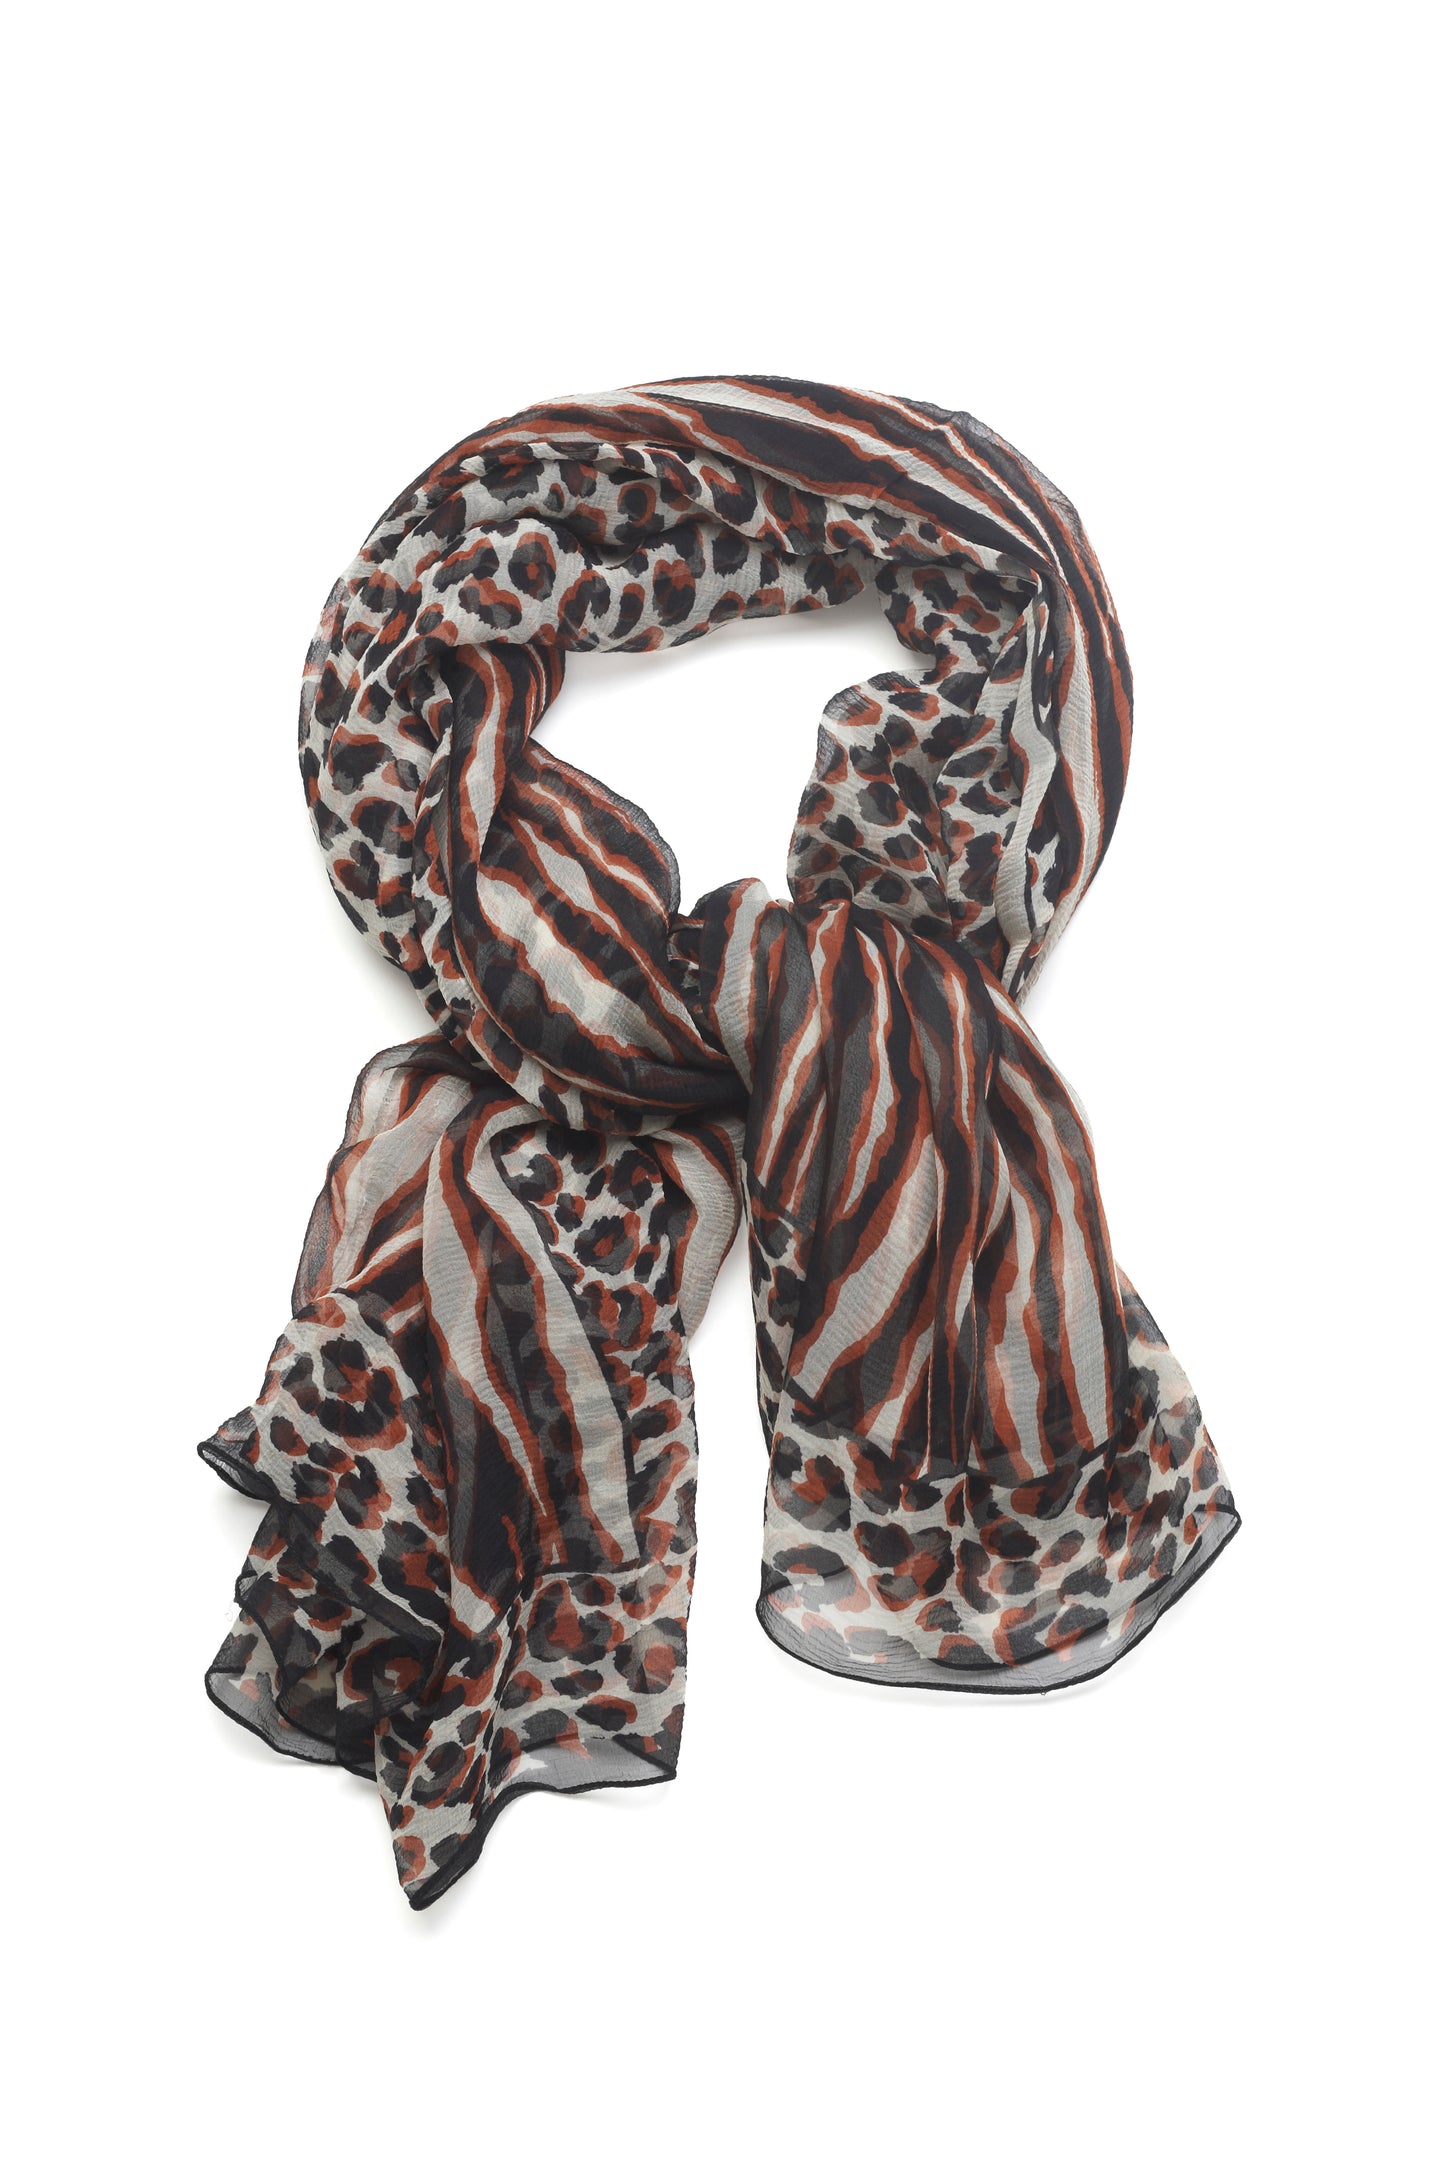 YSL Yves Saint Laurent black, bronze and white animal print silk scarf